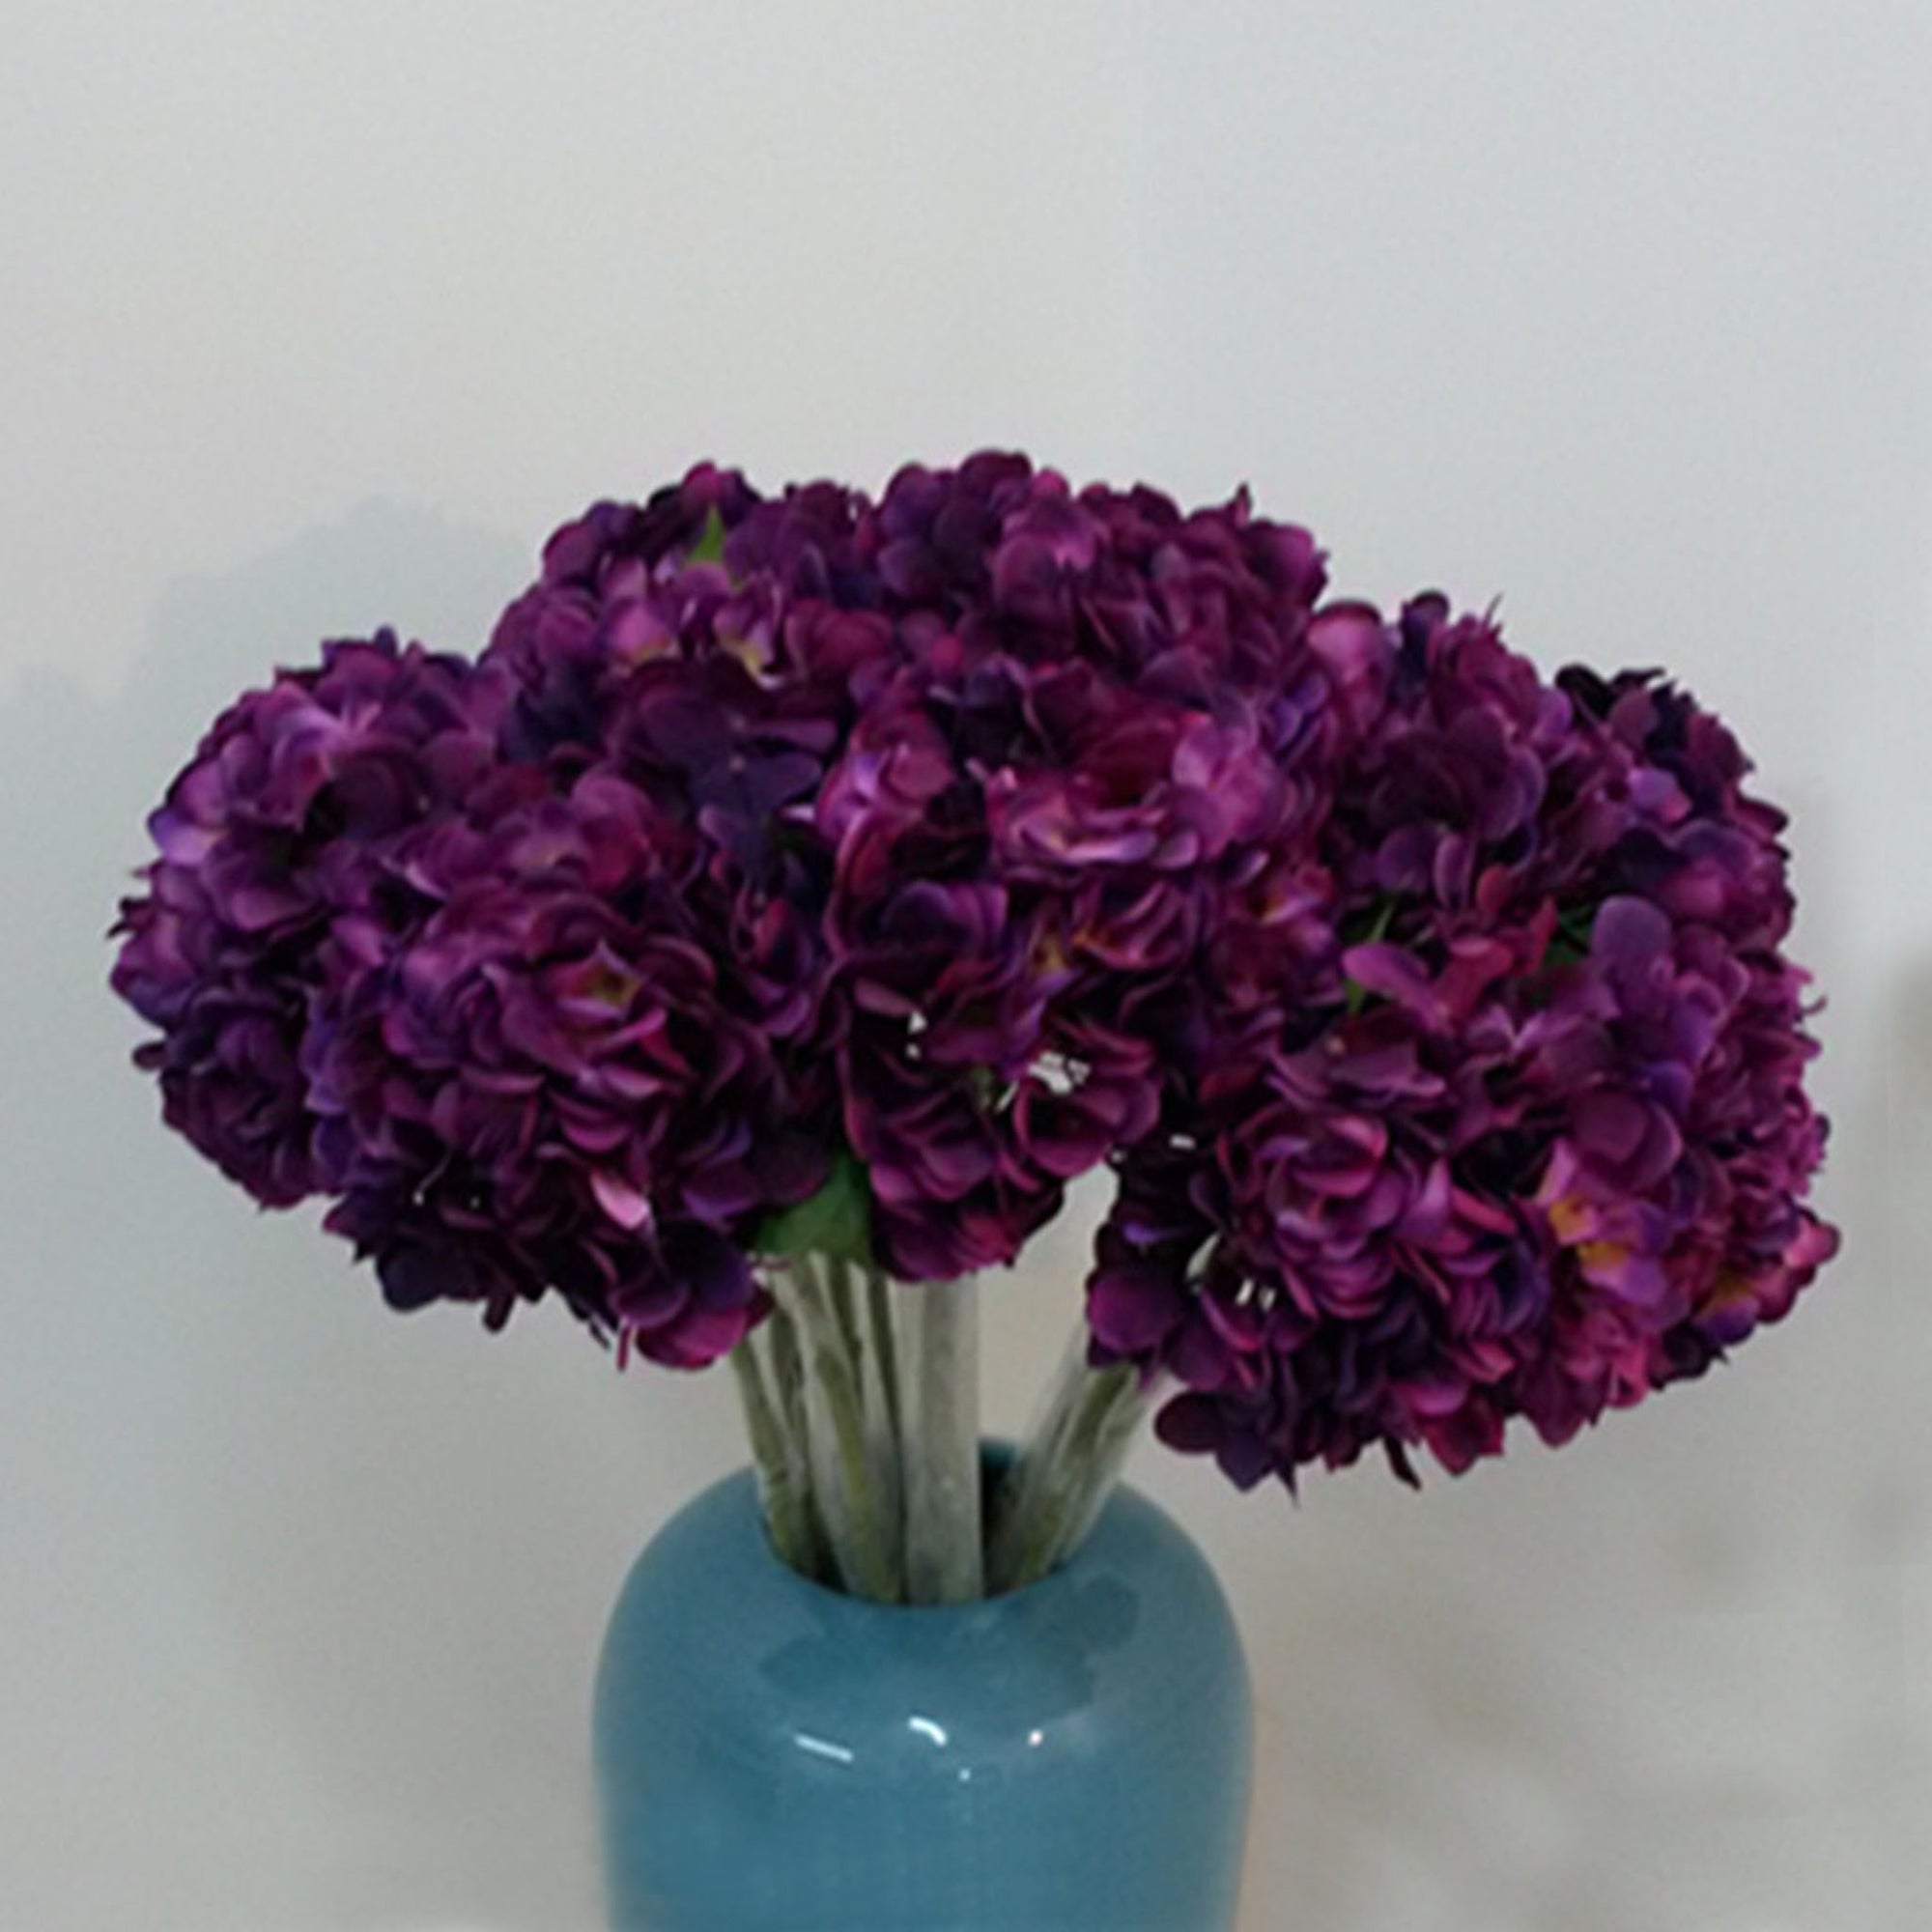 Realistic Silk Hydrangea Flowers 5 Stems for Bridal Bouquets